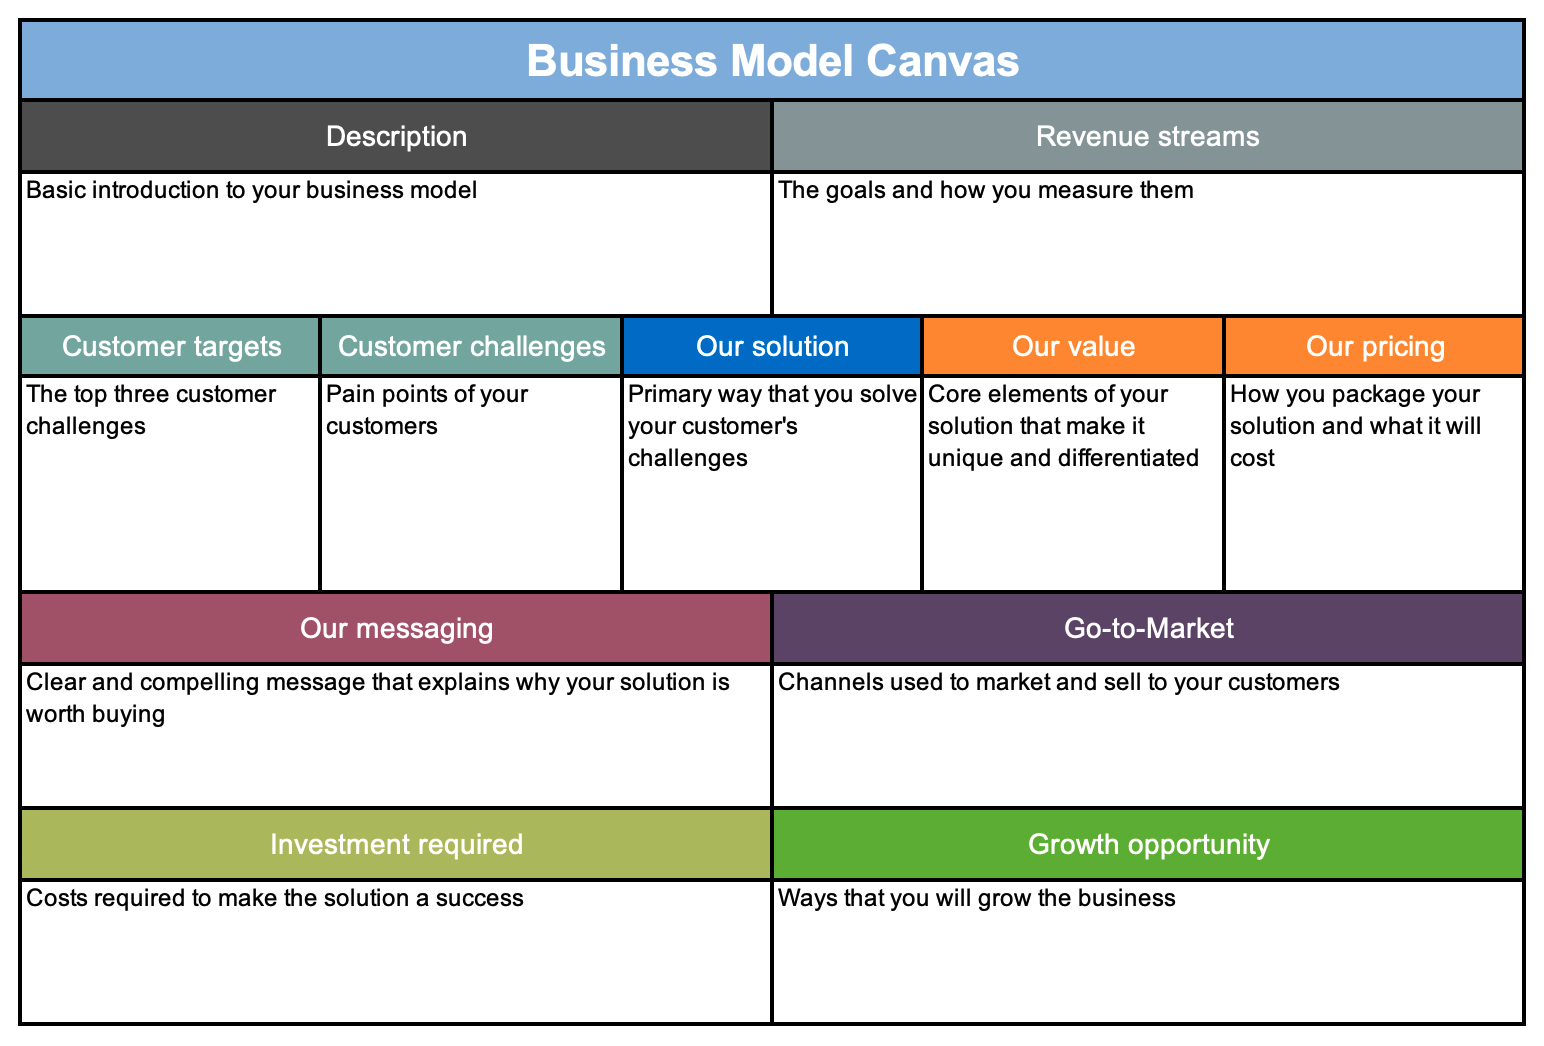 business planning model